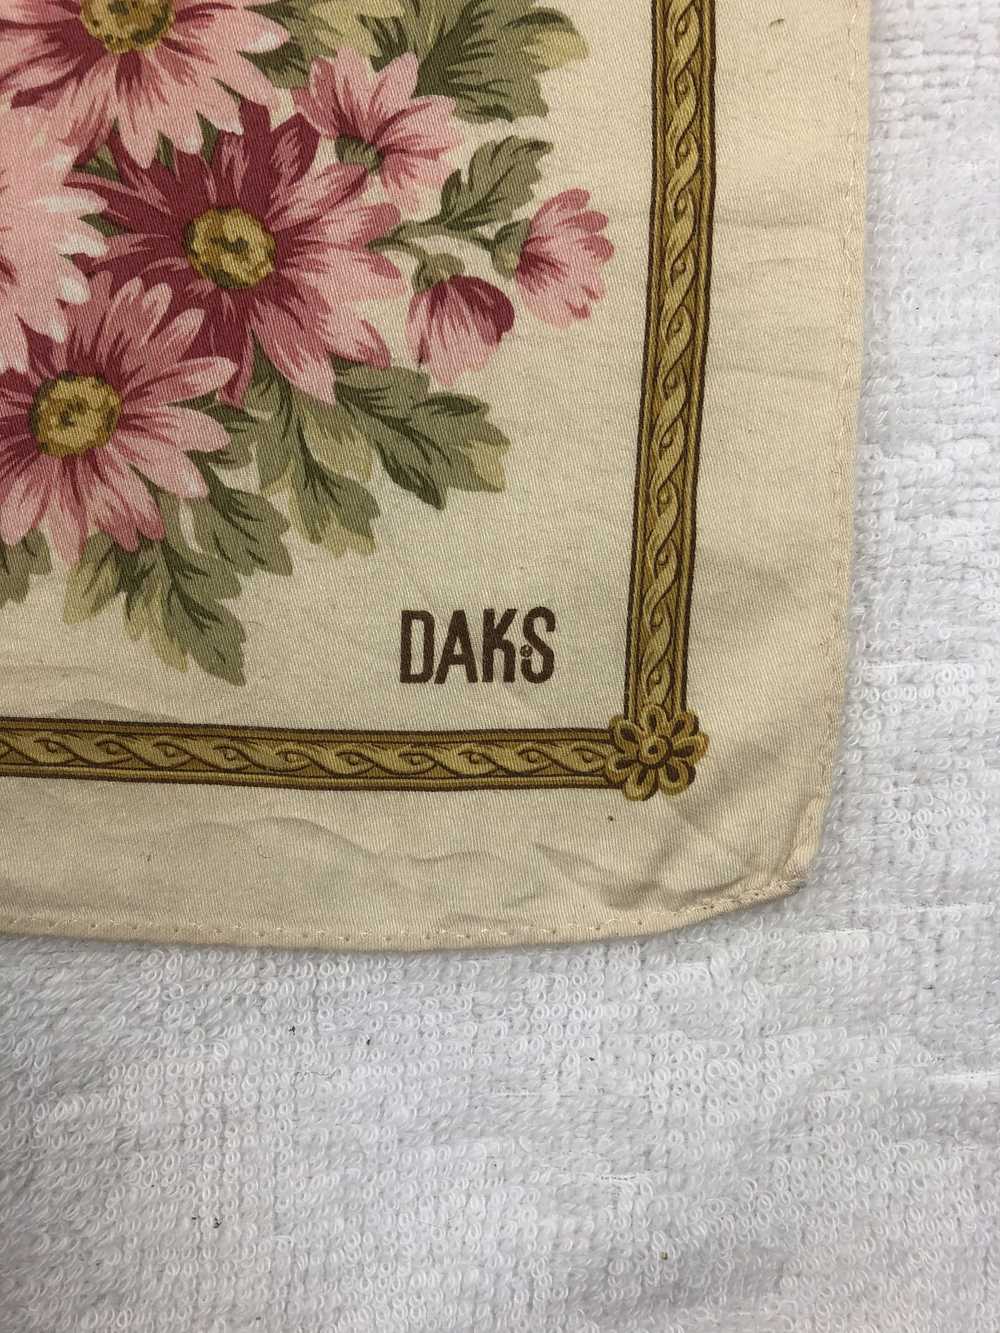 Daks London Daks London Handkerchief / Bandana / … - image 4